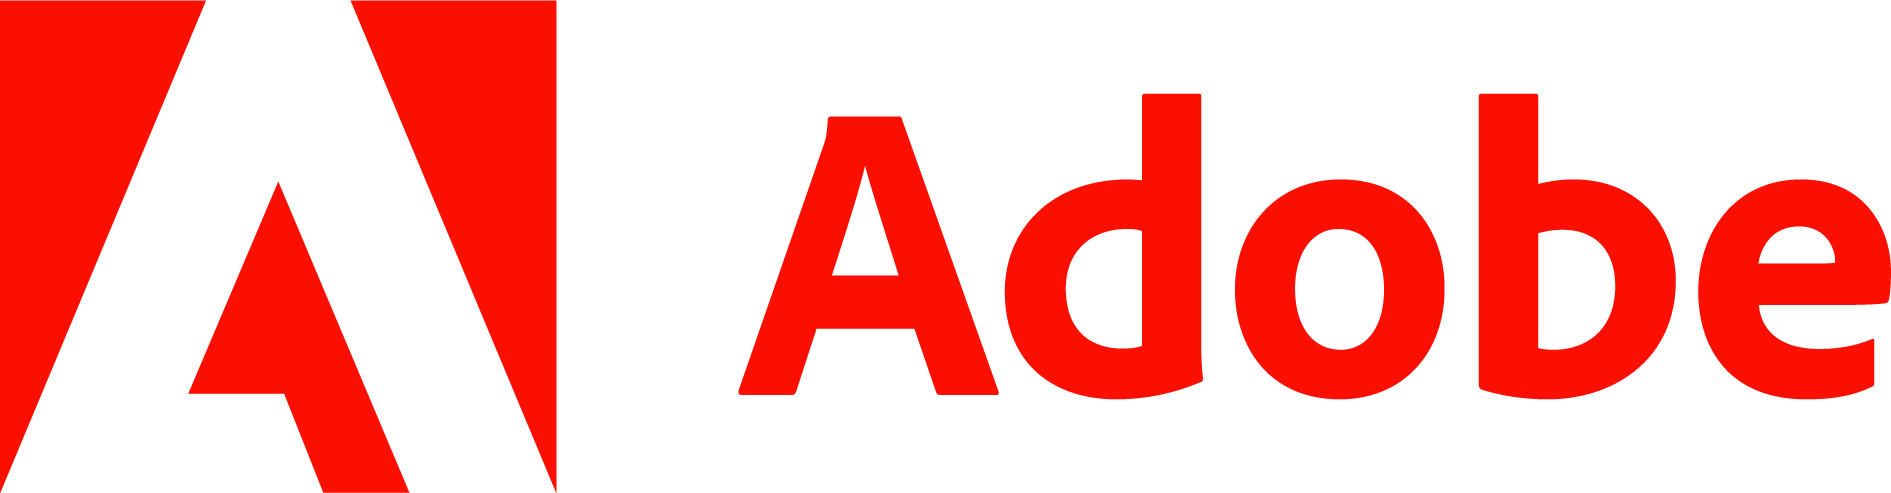 Adobe Student Discount